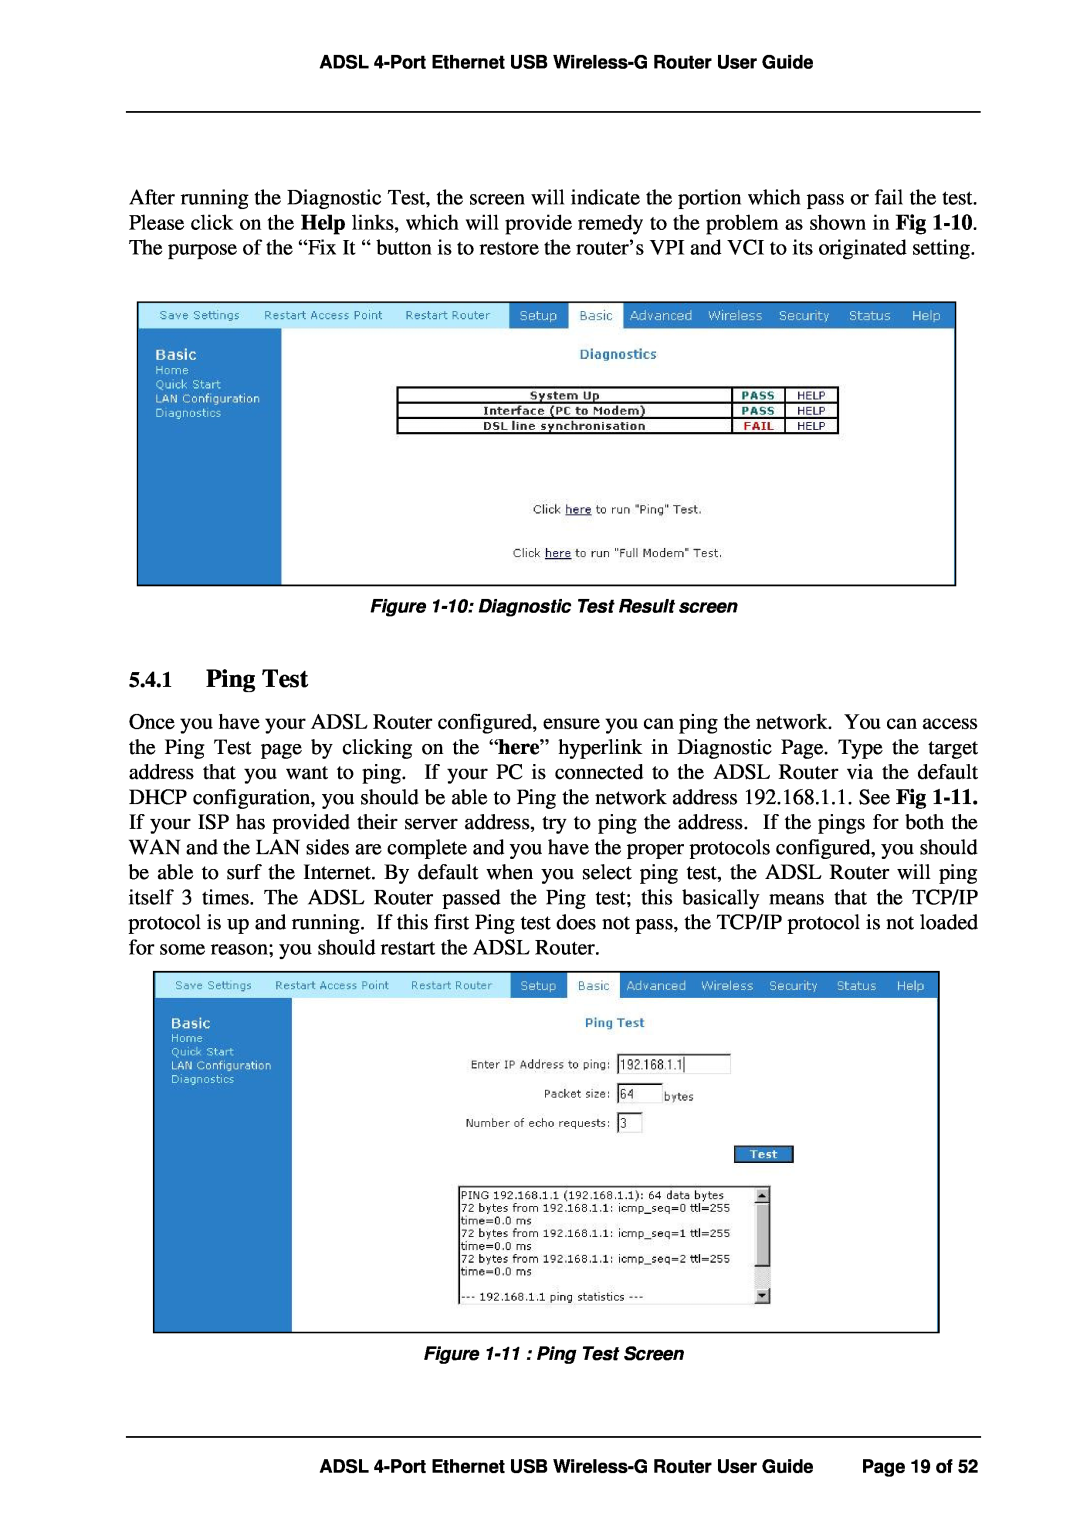 APC ADSL 4-Port manual 10 Diagnostic Test Result screen, 11 Ping Test Screen 